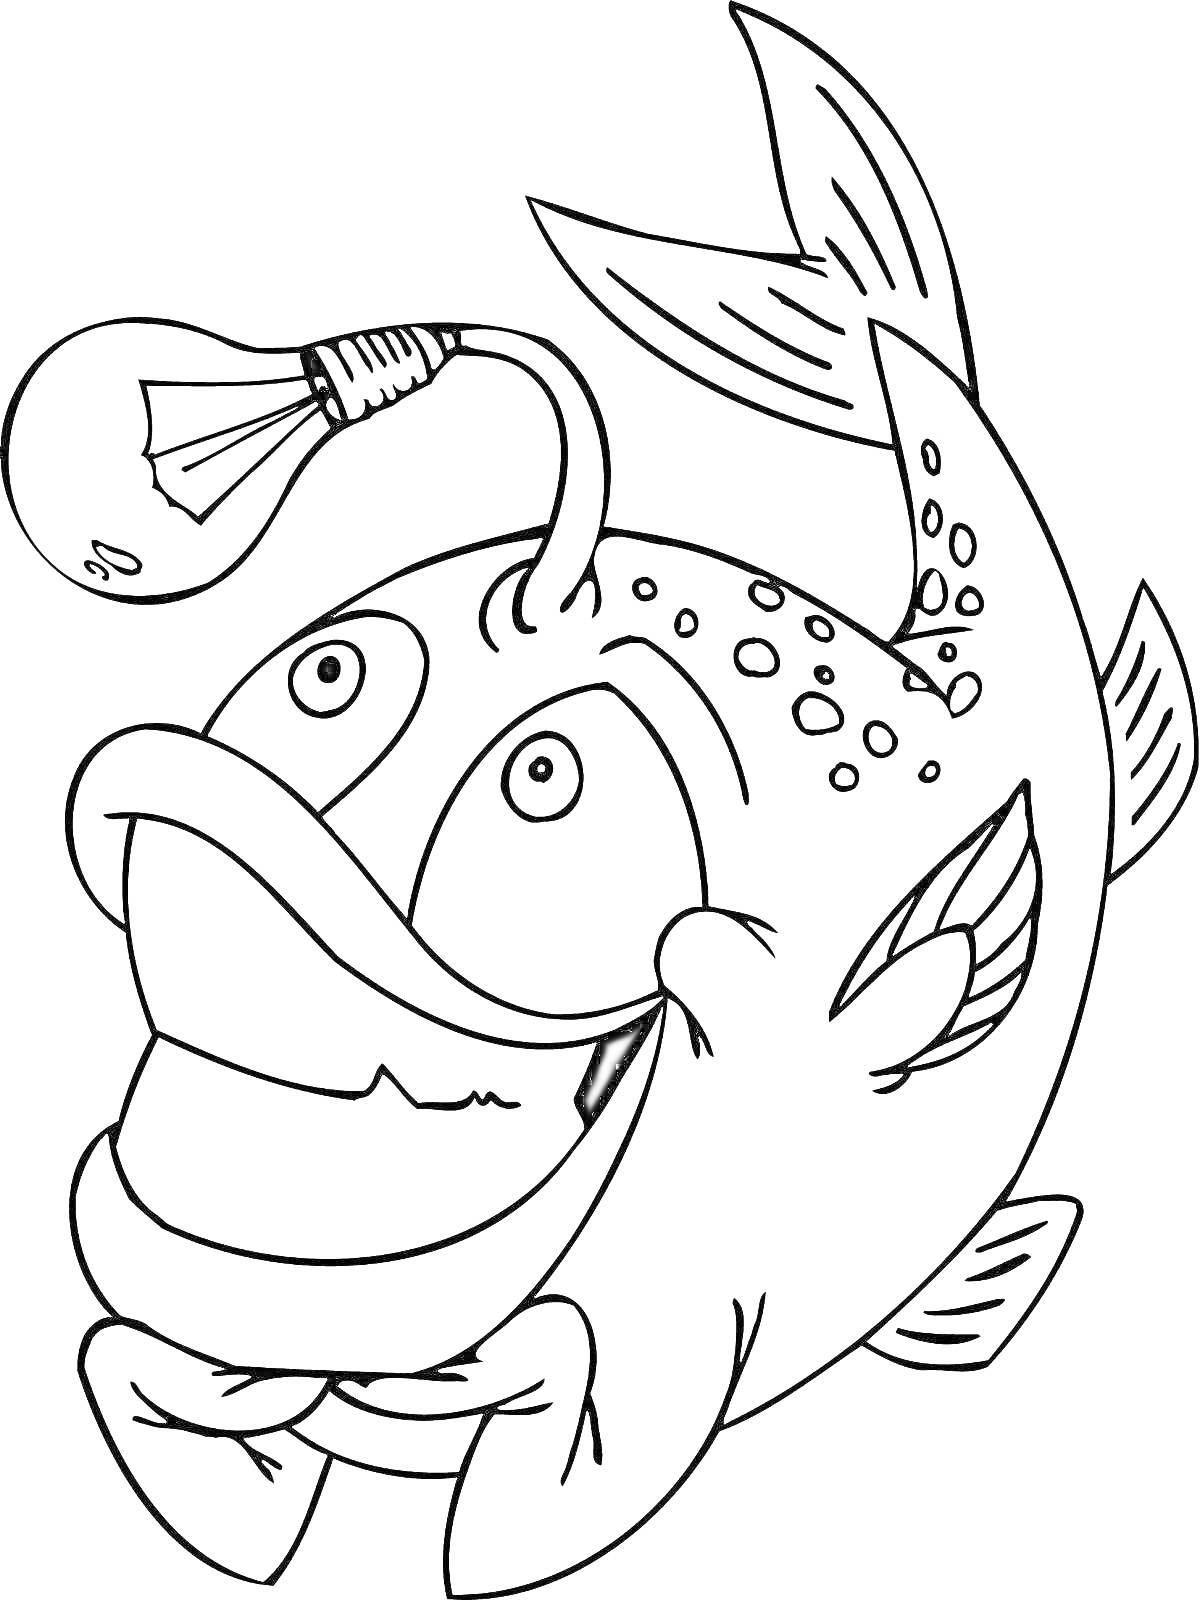 Раскраска Смешная рыба-удильщик с лампочкой на голове